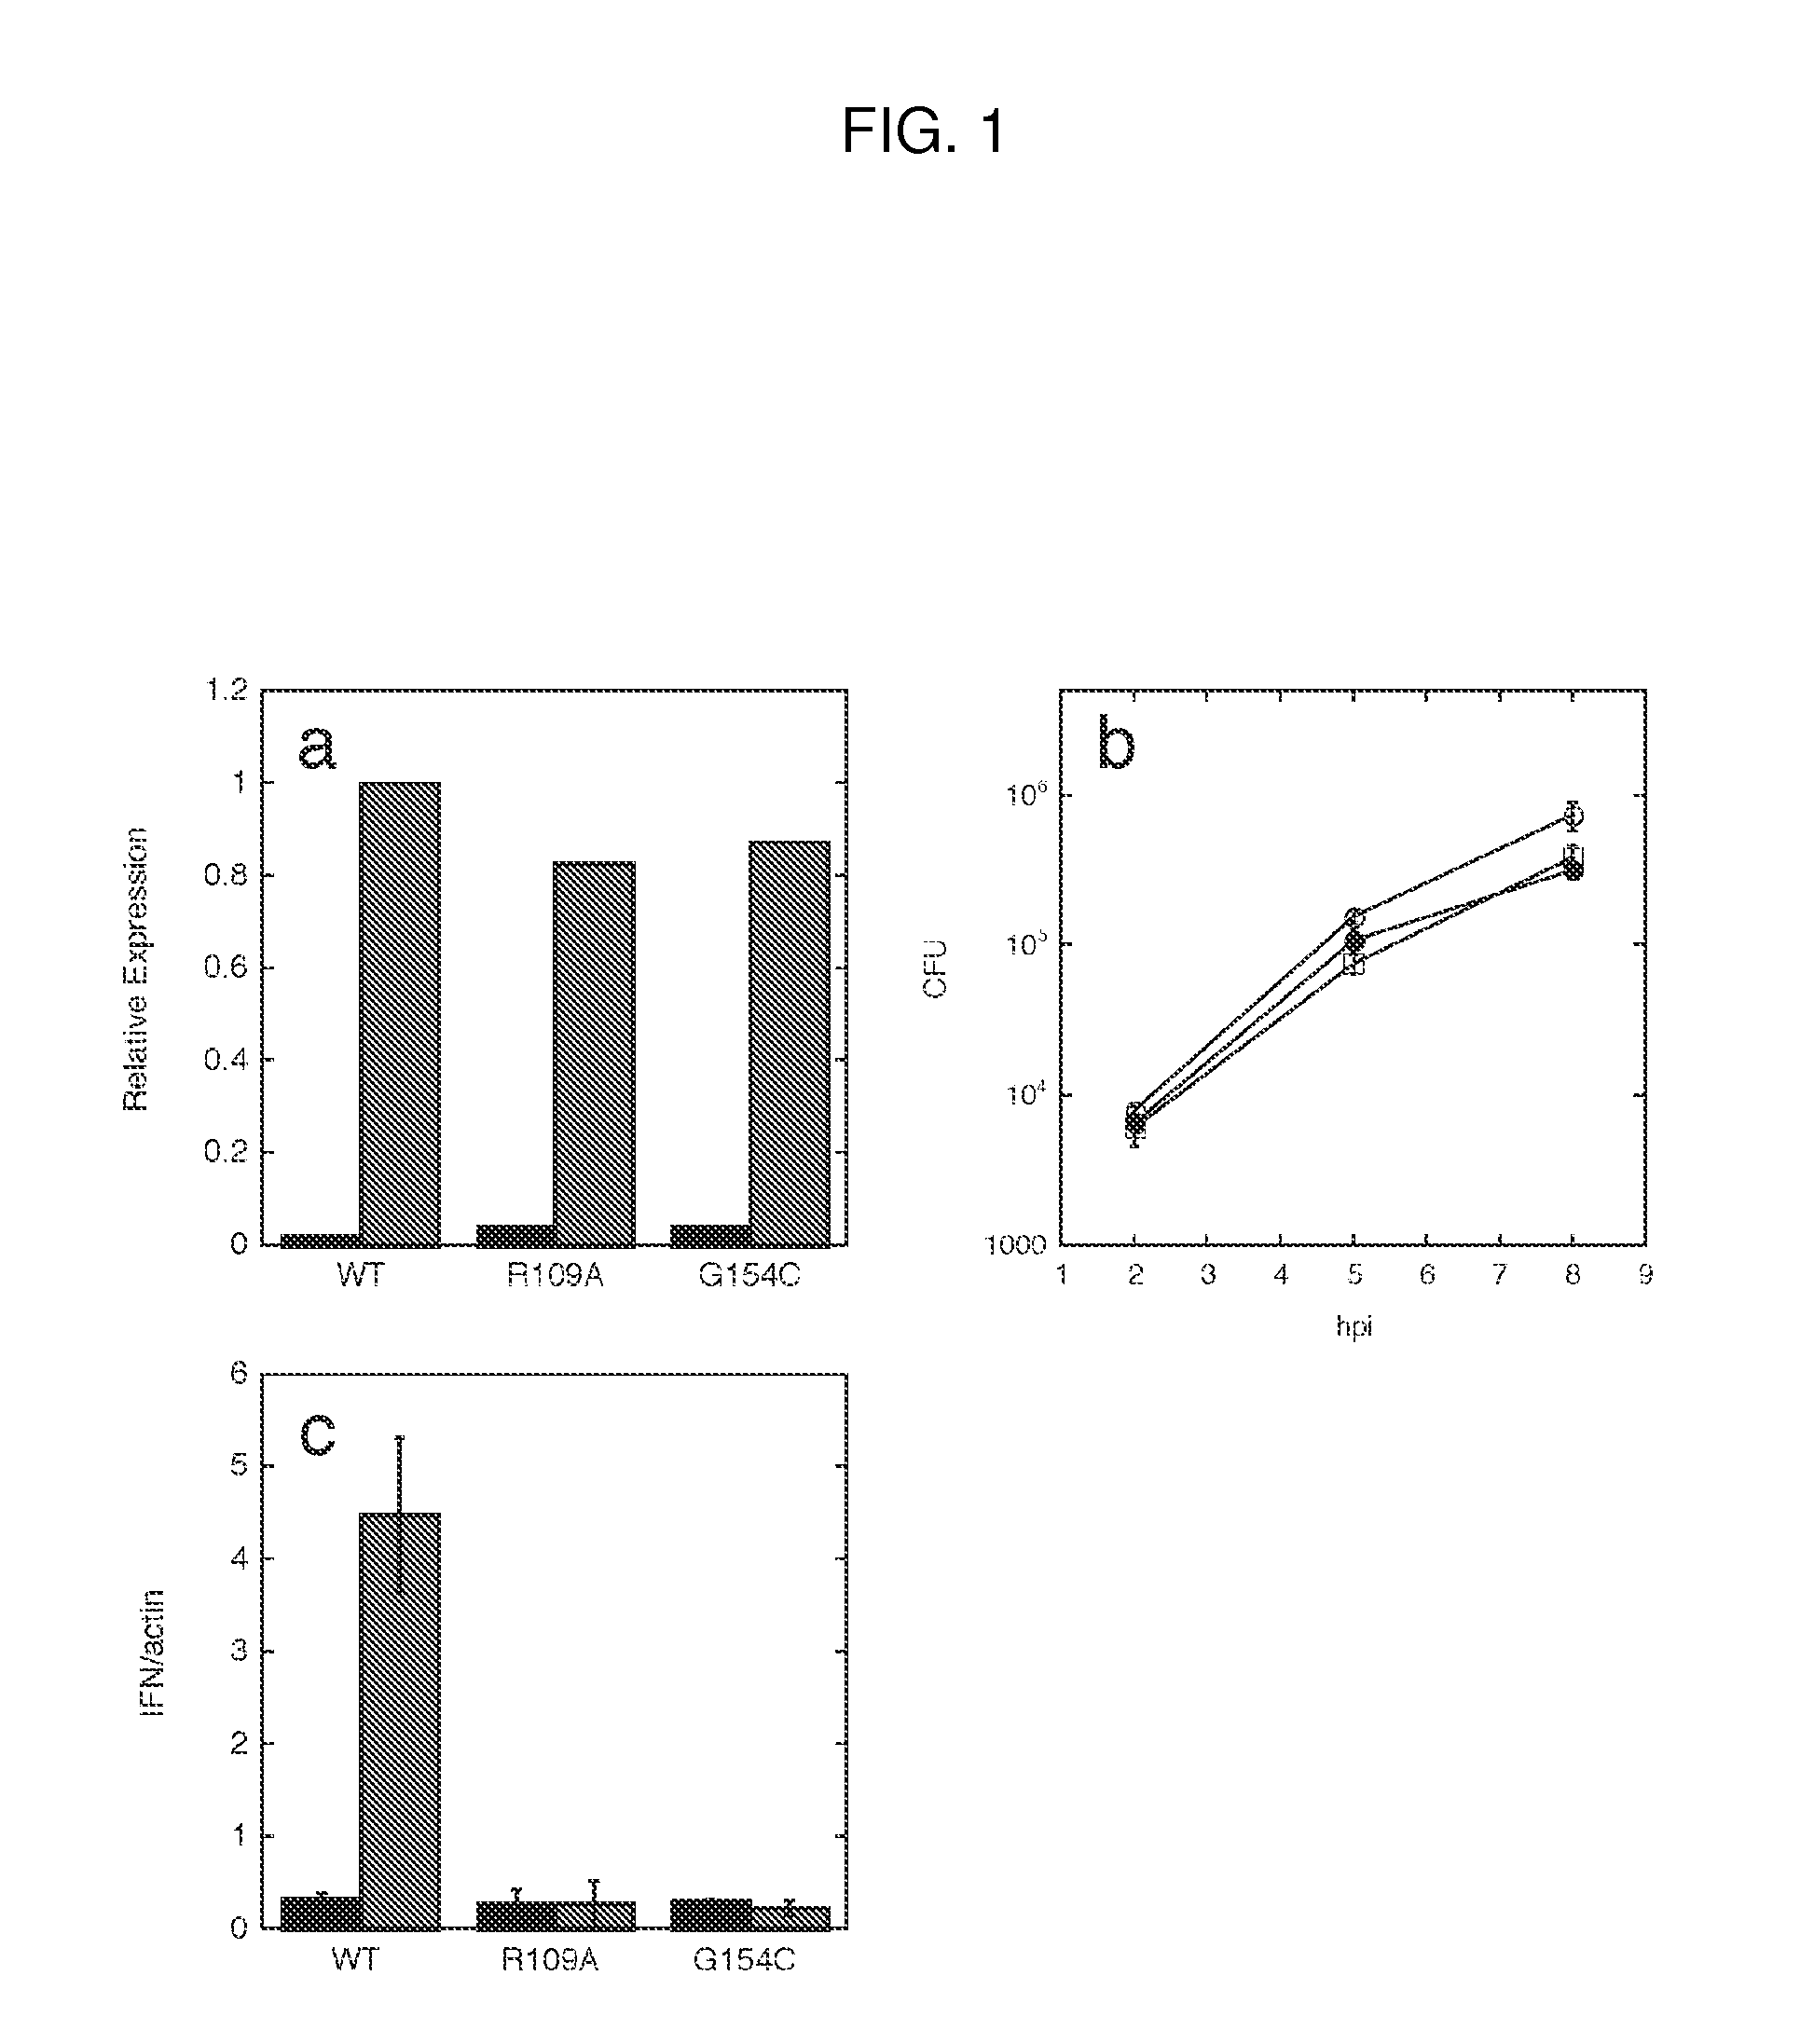 Cyclic di-amp induction of type i interferon